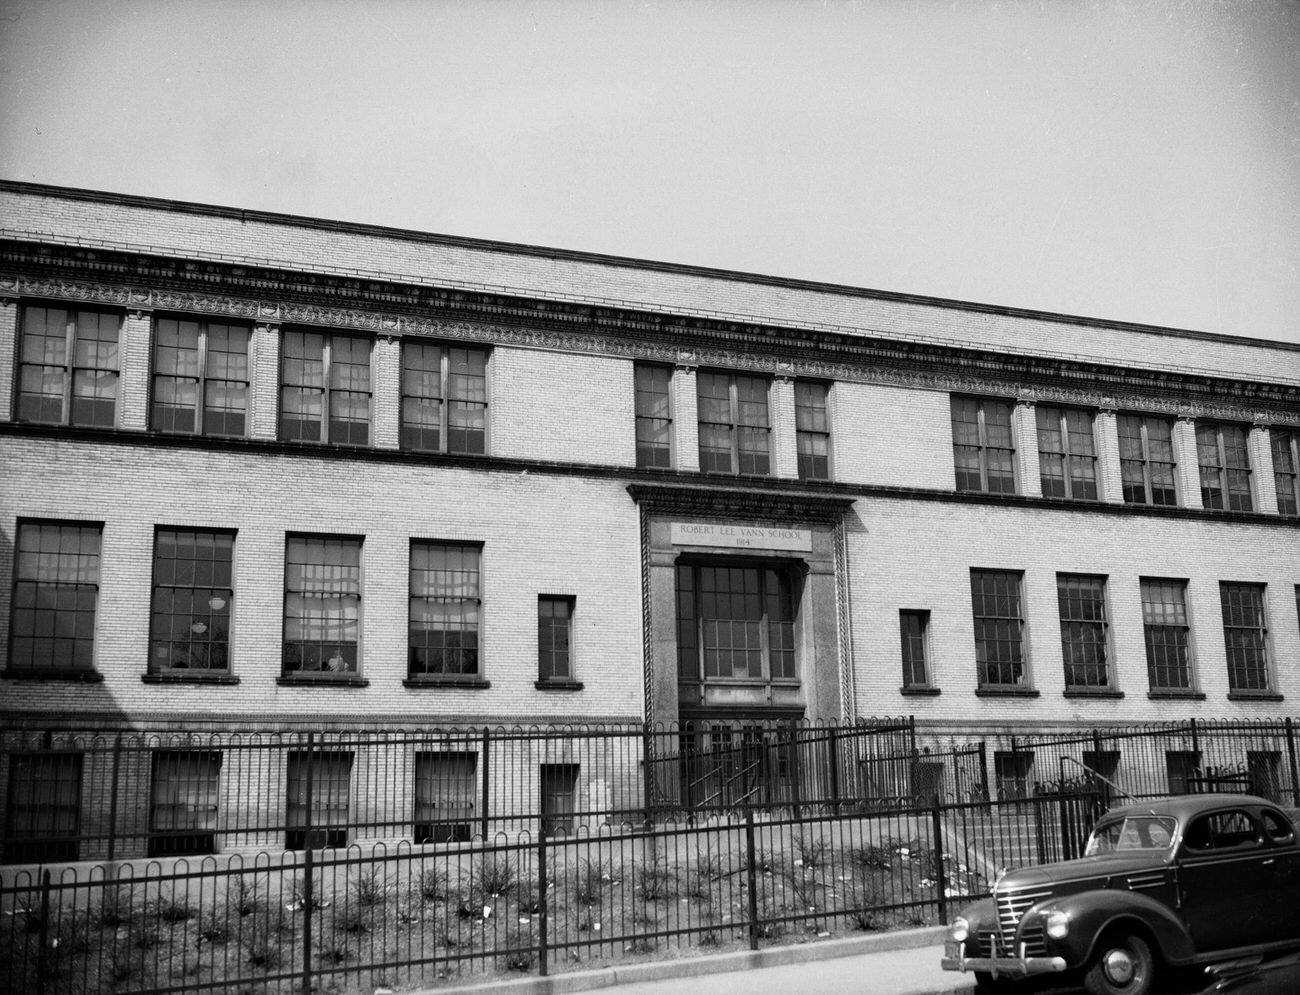 Robert L. Vann Elementary School Exterior, 1944